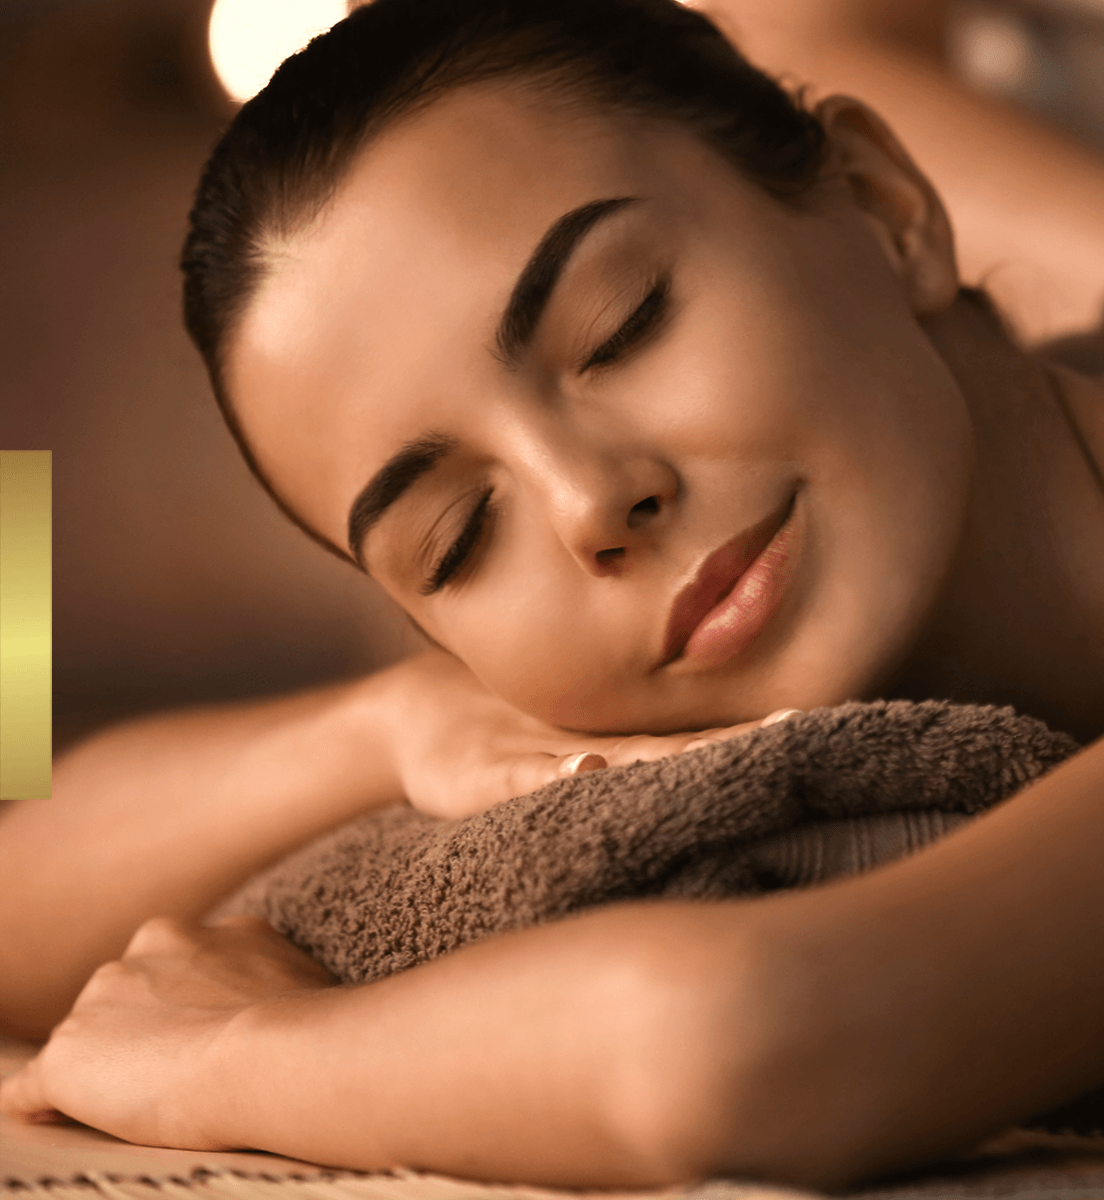 Massage at A.F. Bennett Salon & Wellness Spa